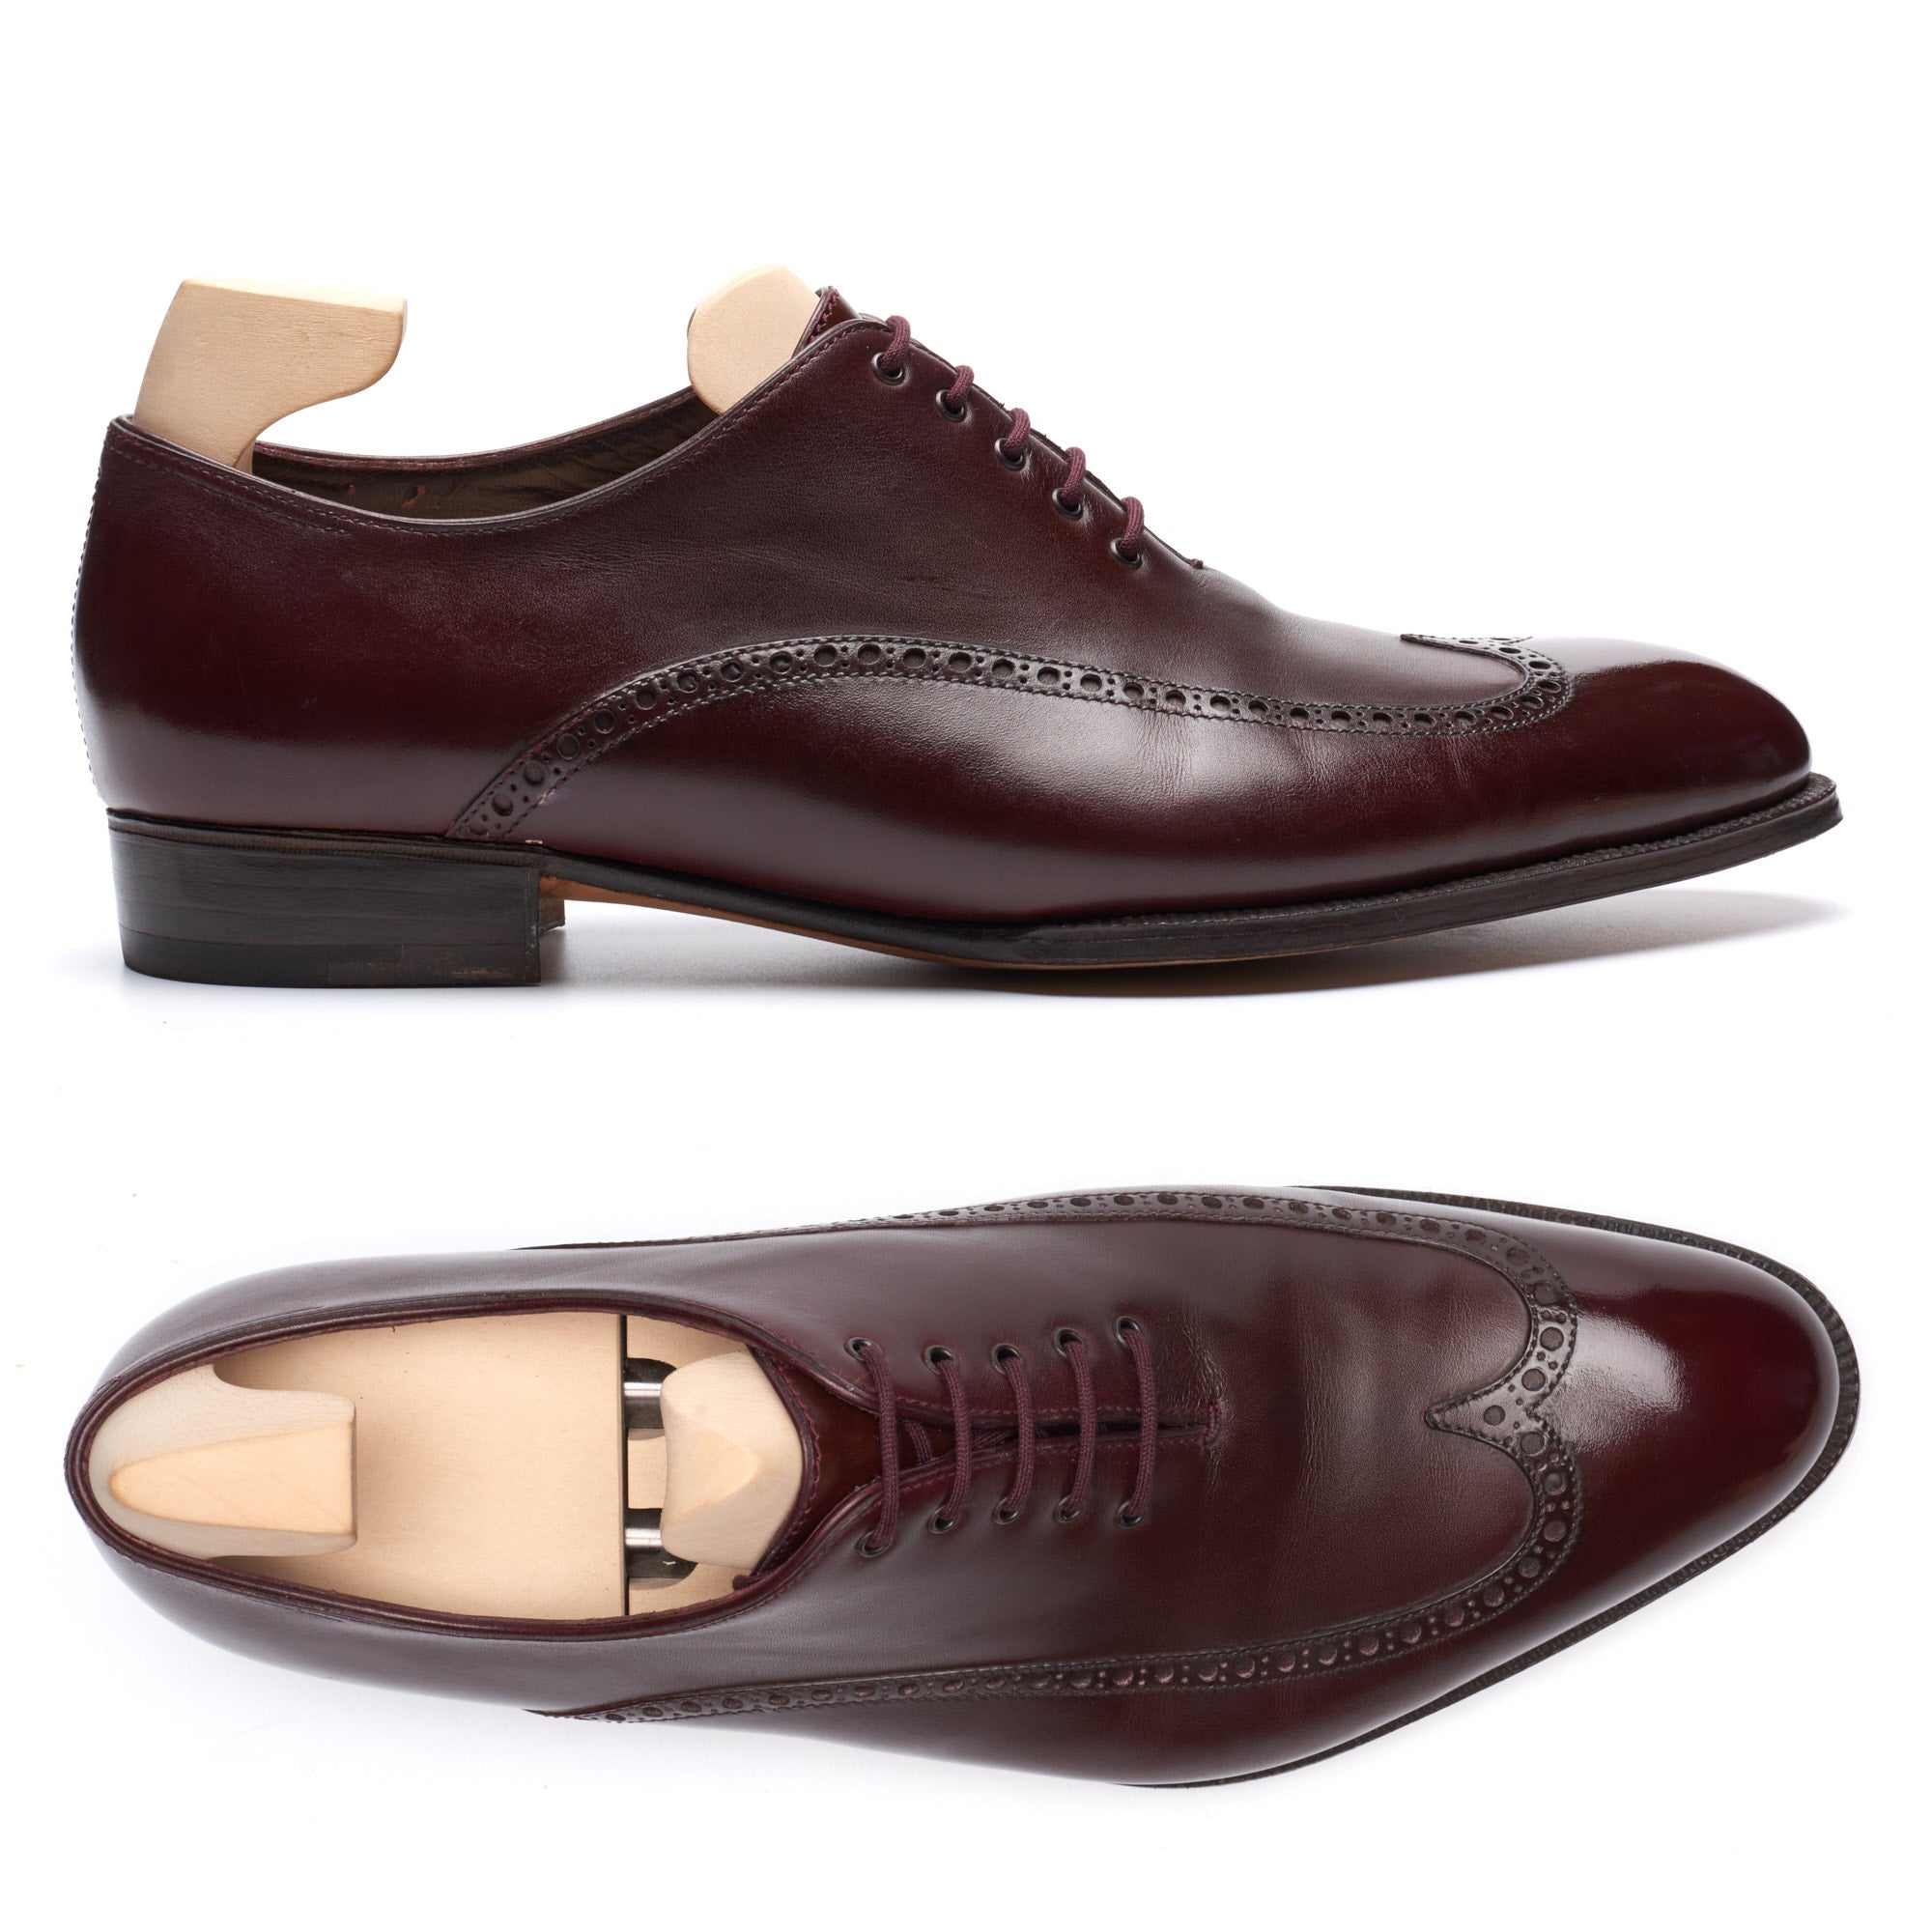 JOHN LOBB Paris Bespoke Dark Cherry Leather Oxford Shoes 7.5D US 8.5 NEW